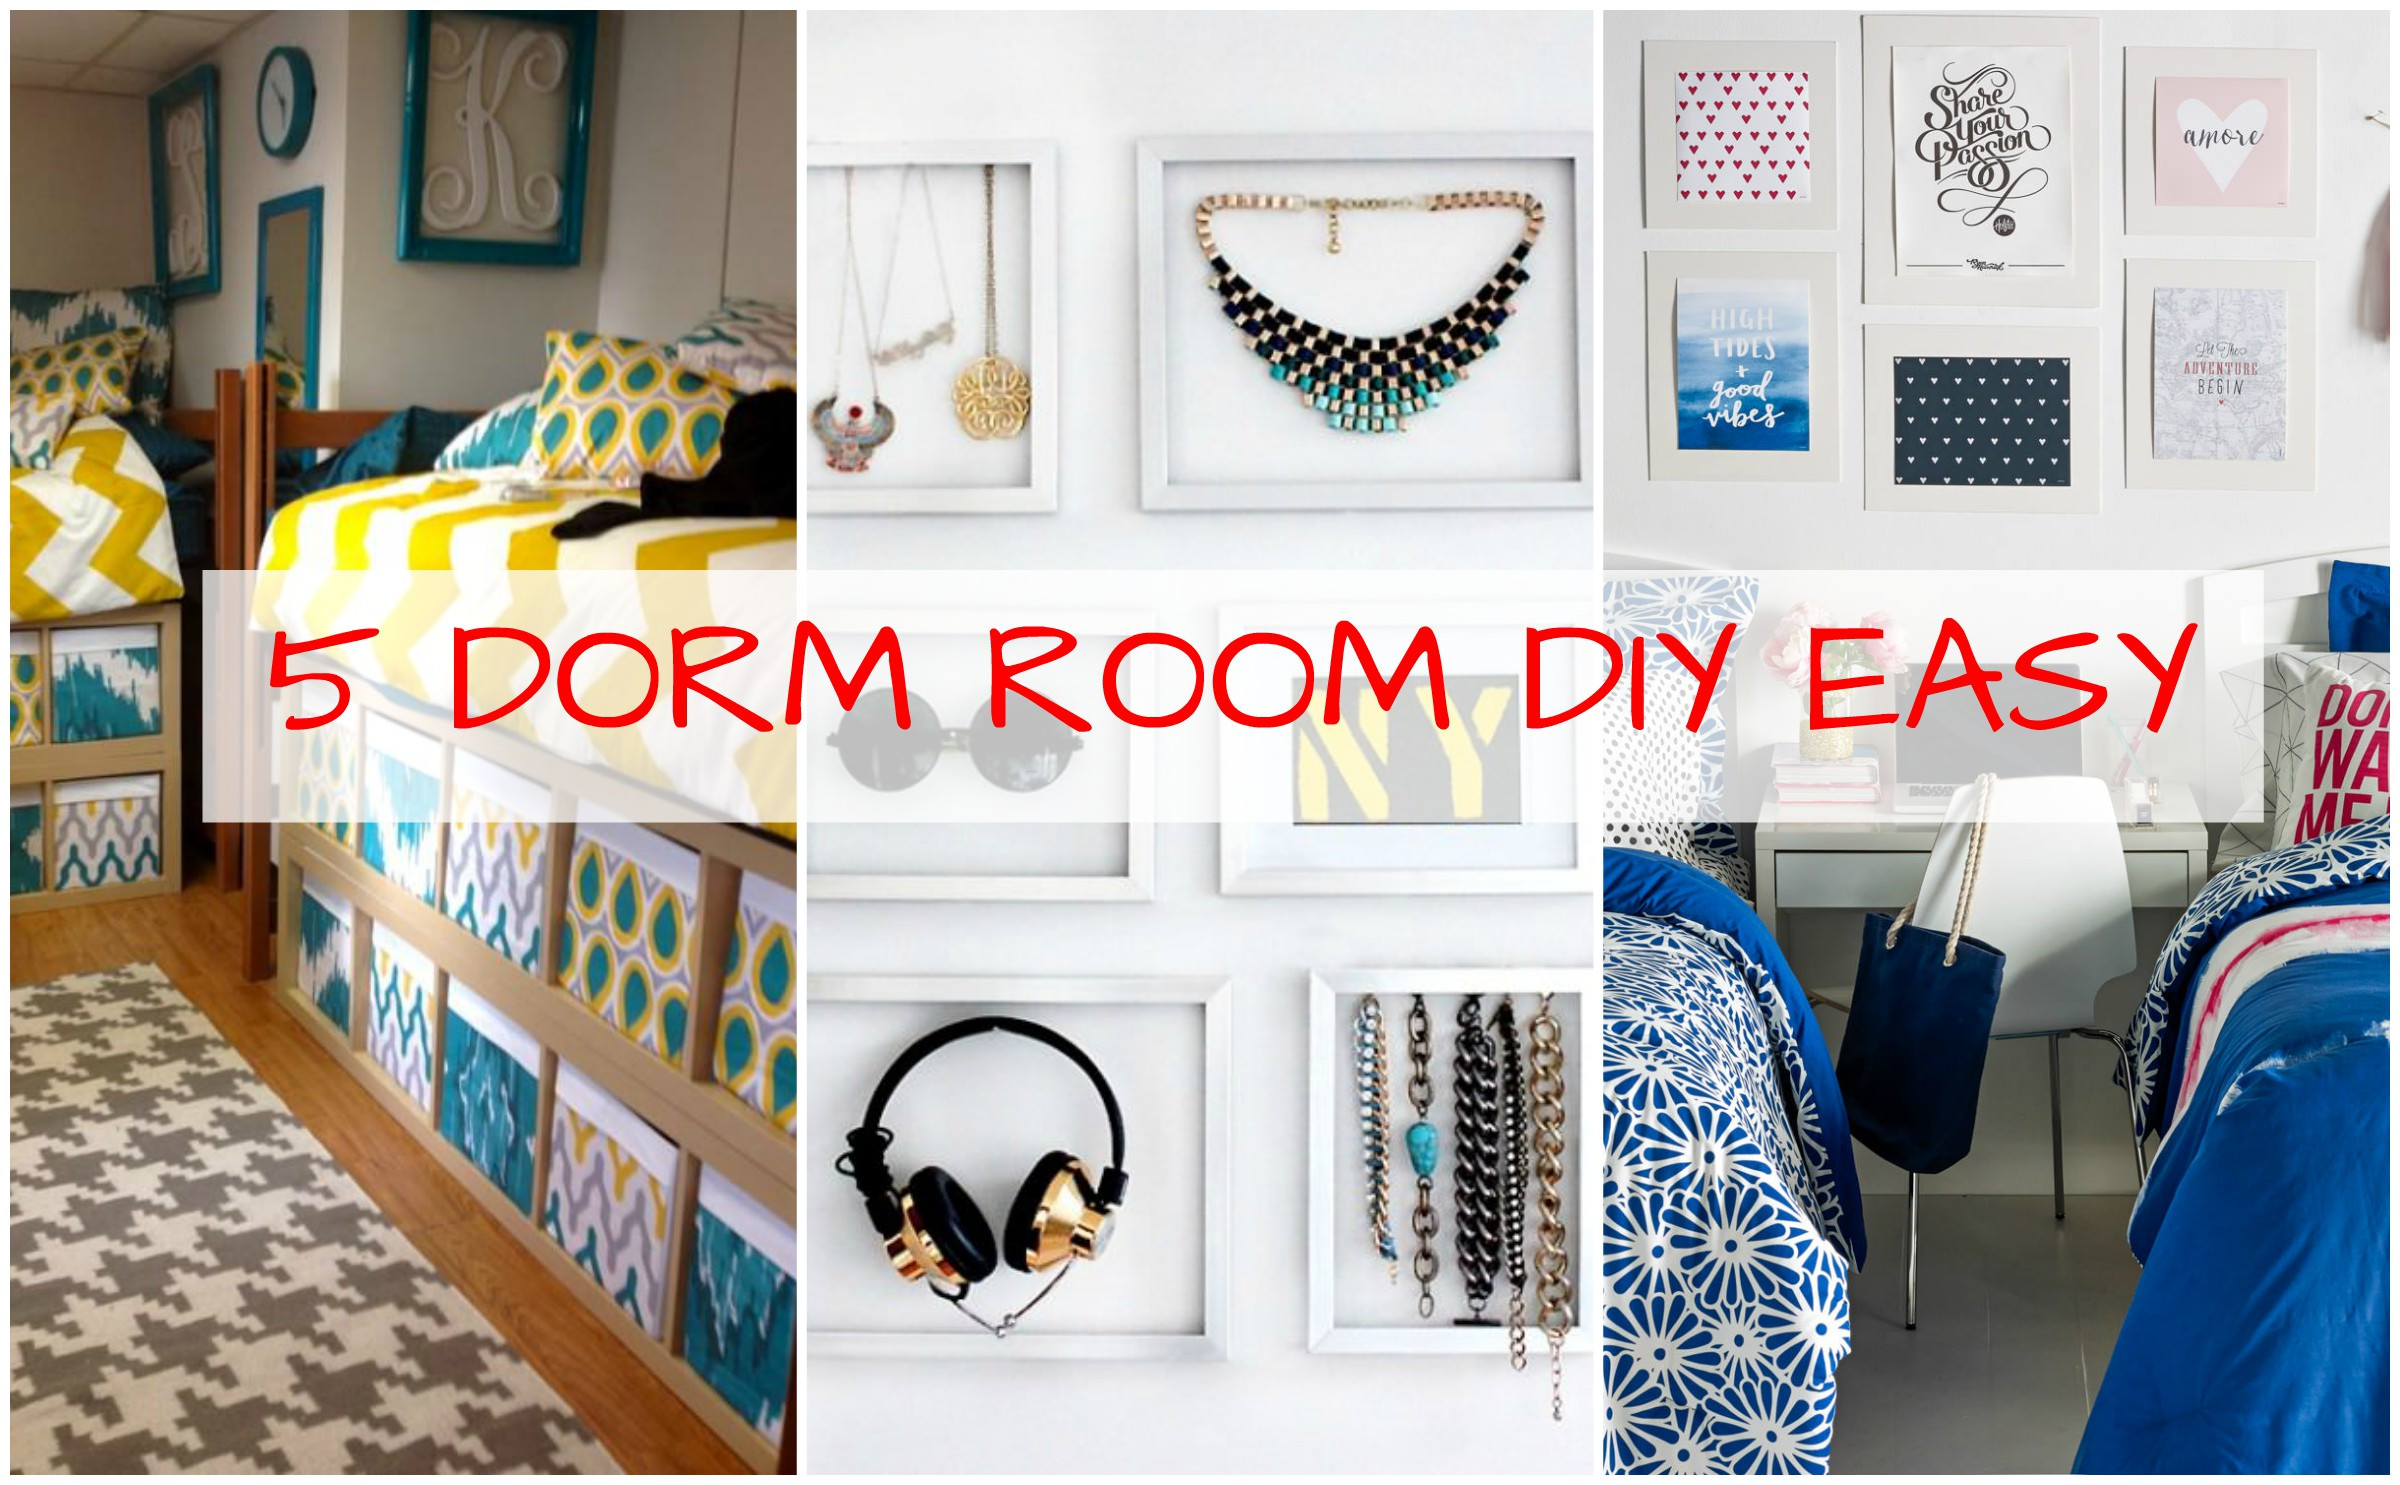 Best ideas about Dorm Room DIY
. Save or Pin 5 Best Dorm Room Diy Sample Designs Easy — Lugenda Now.